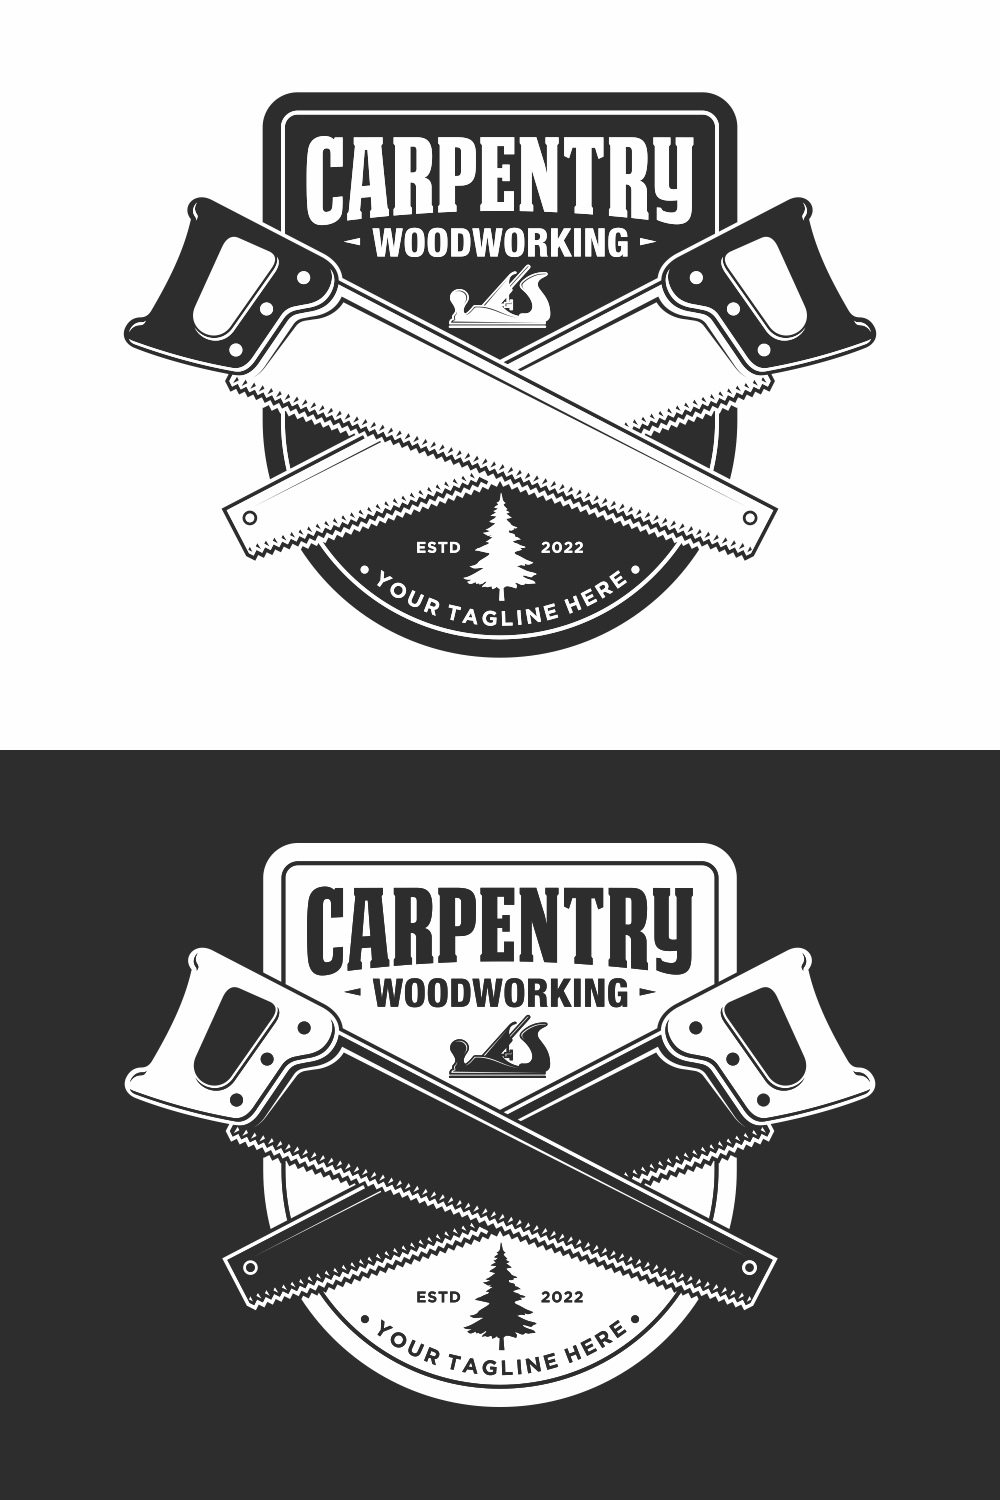 carpentry retro vintage logo design – Only $6 pinterest preview image.